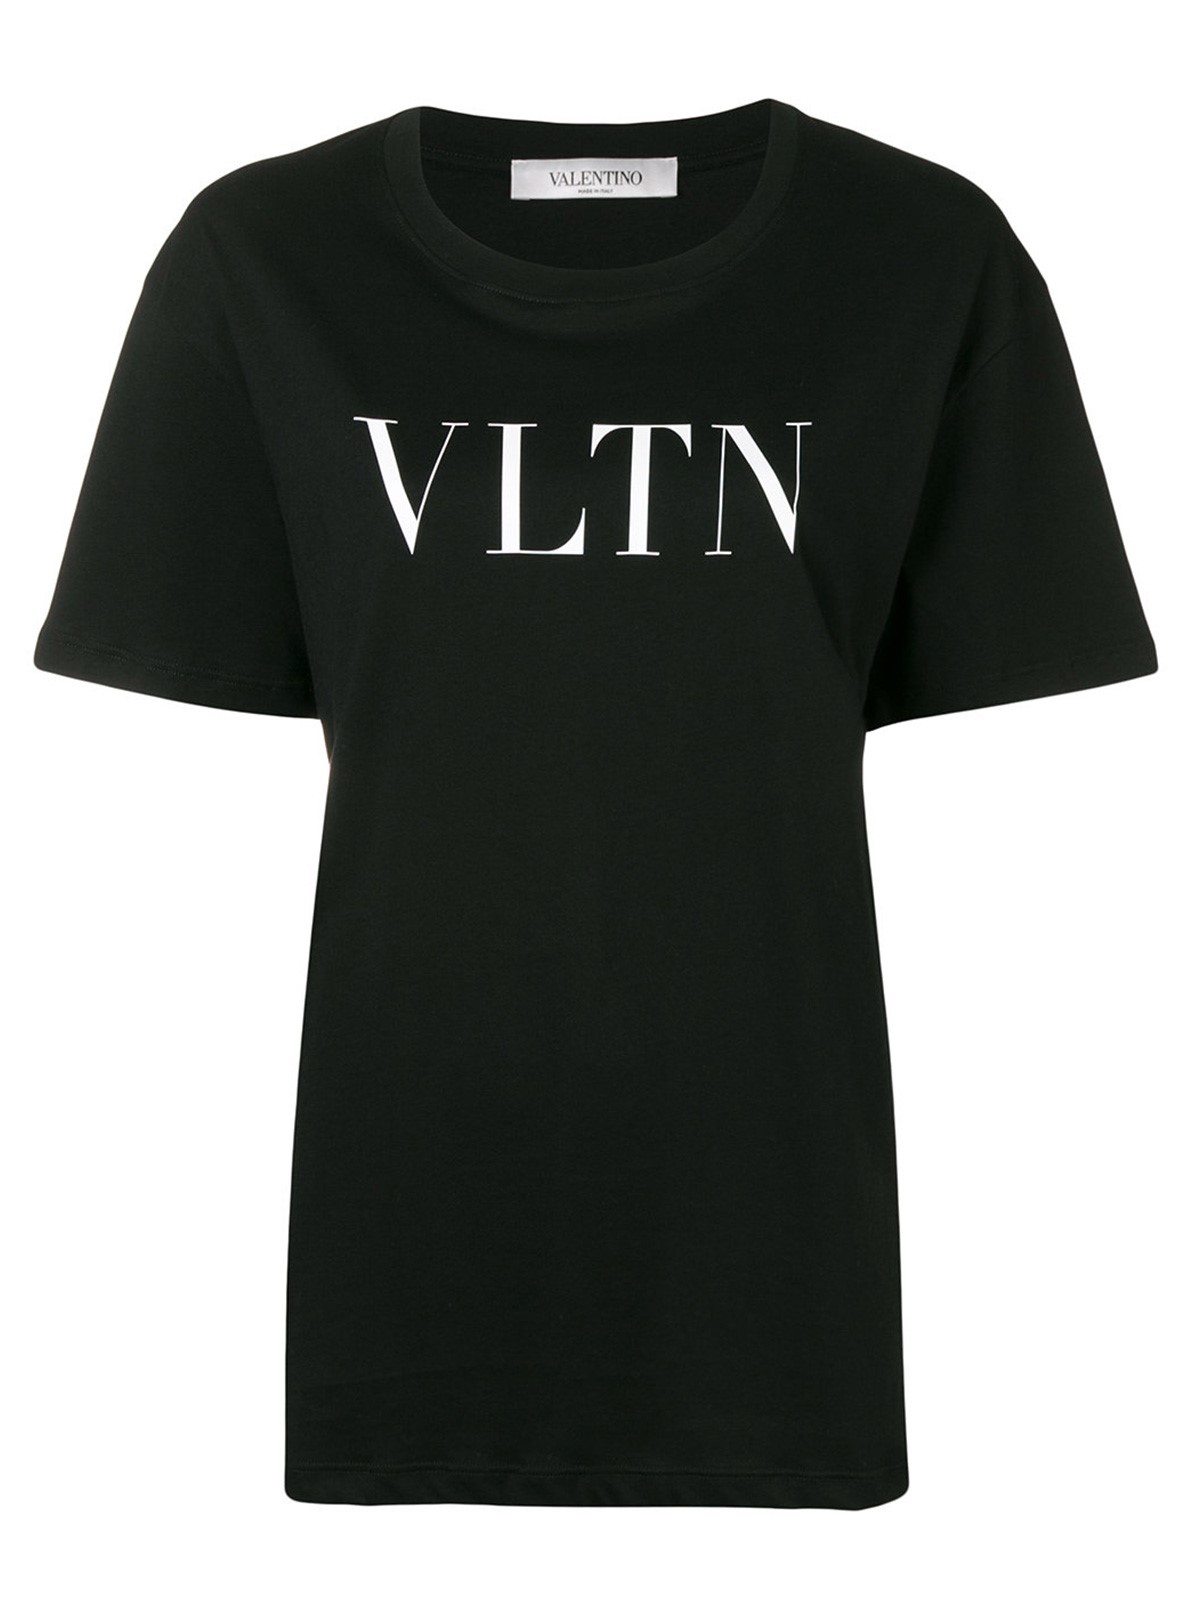 valentino VLTN T-SHIRT available on montiboutique.com - 23125